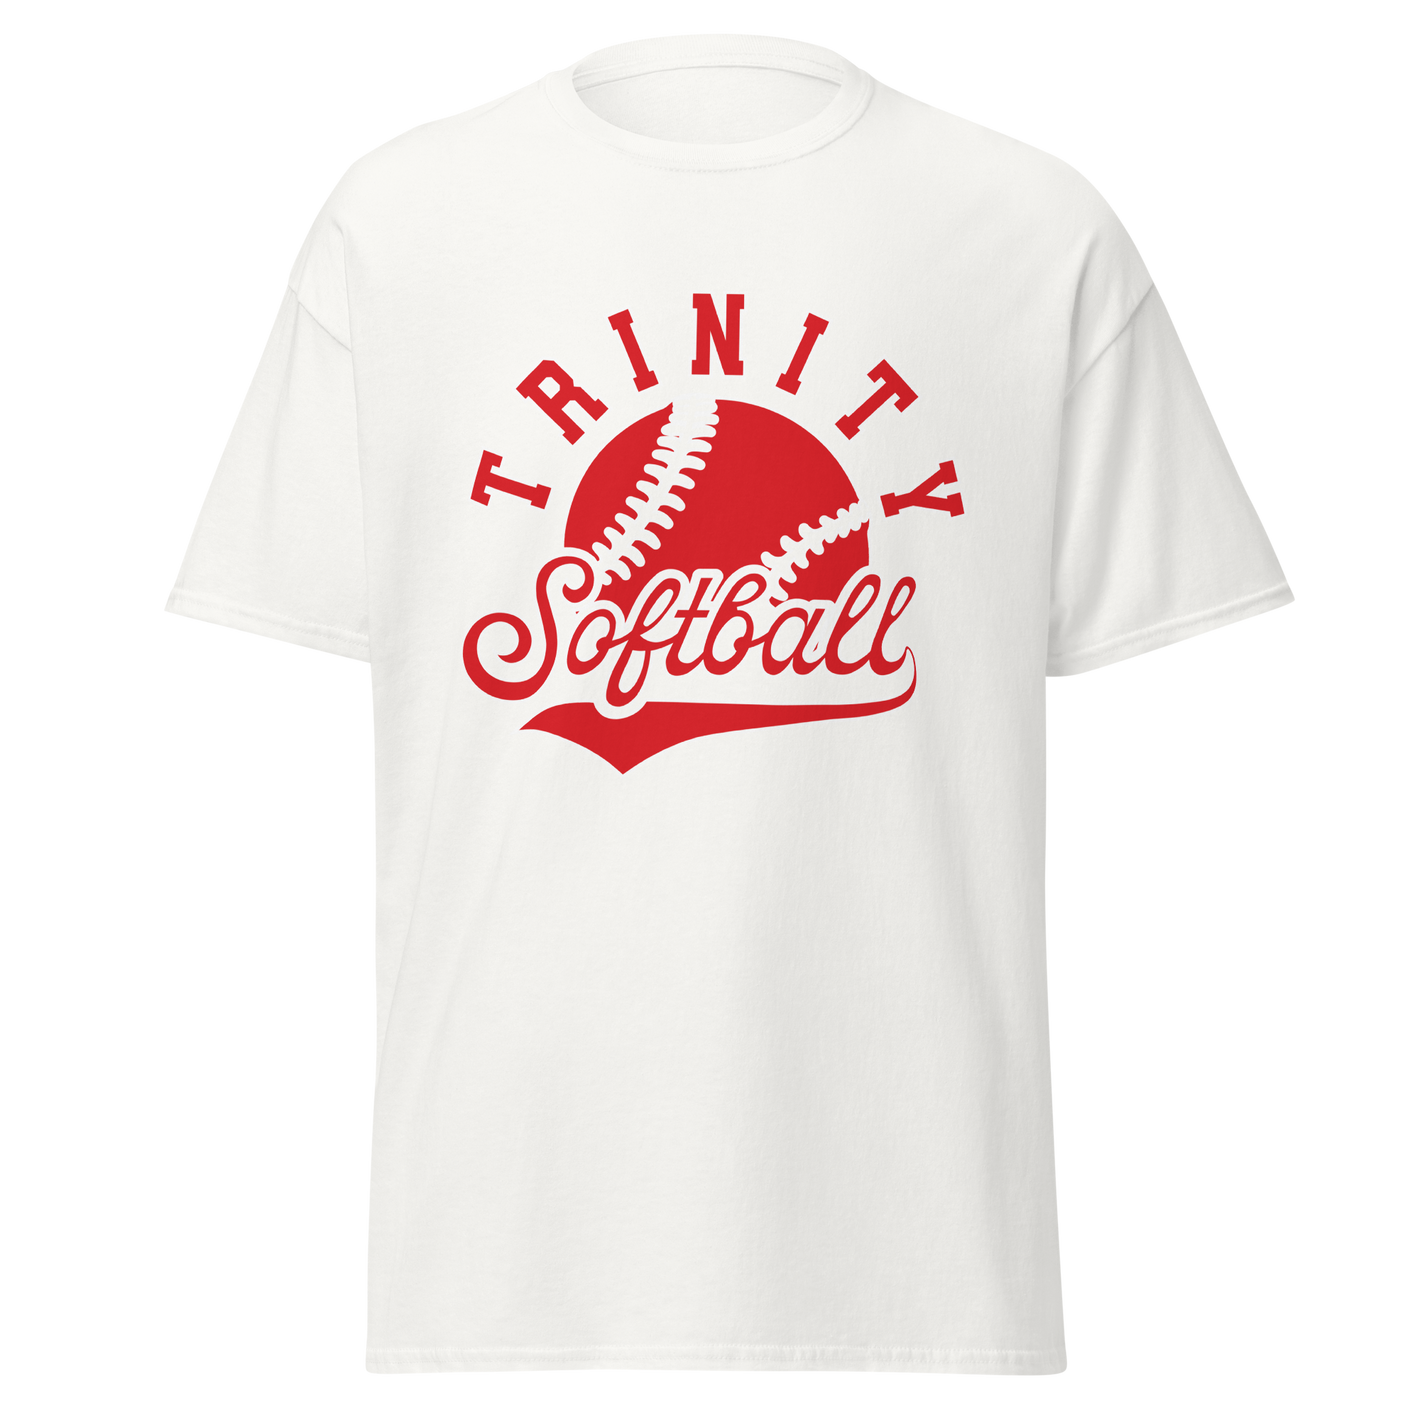 Trinity Softball classic tee